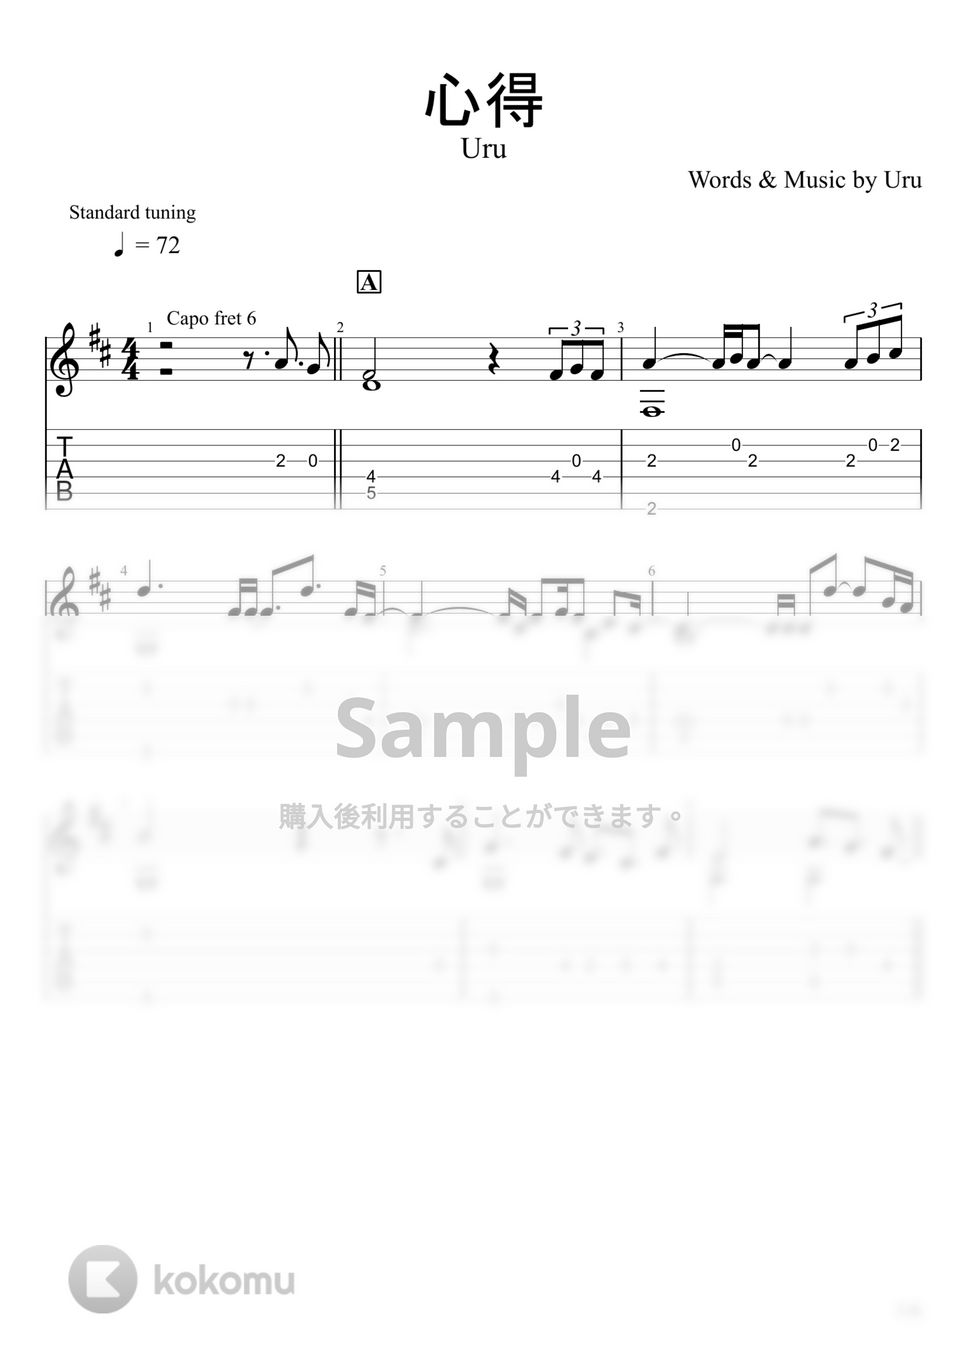 Uru - 心得 (ソロギター) by u3danchou